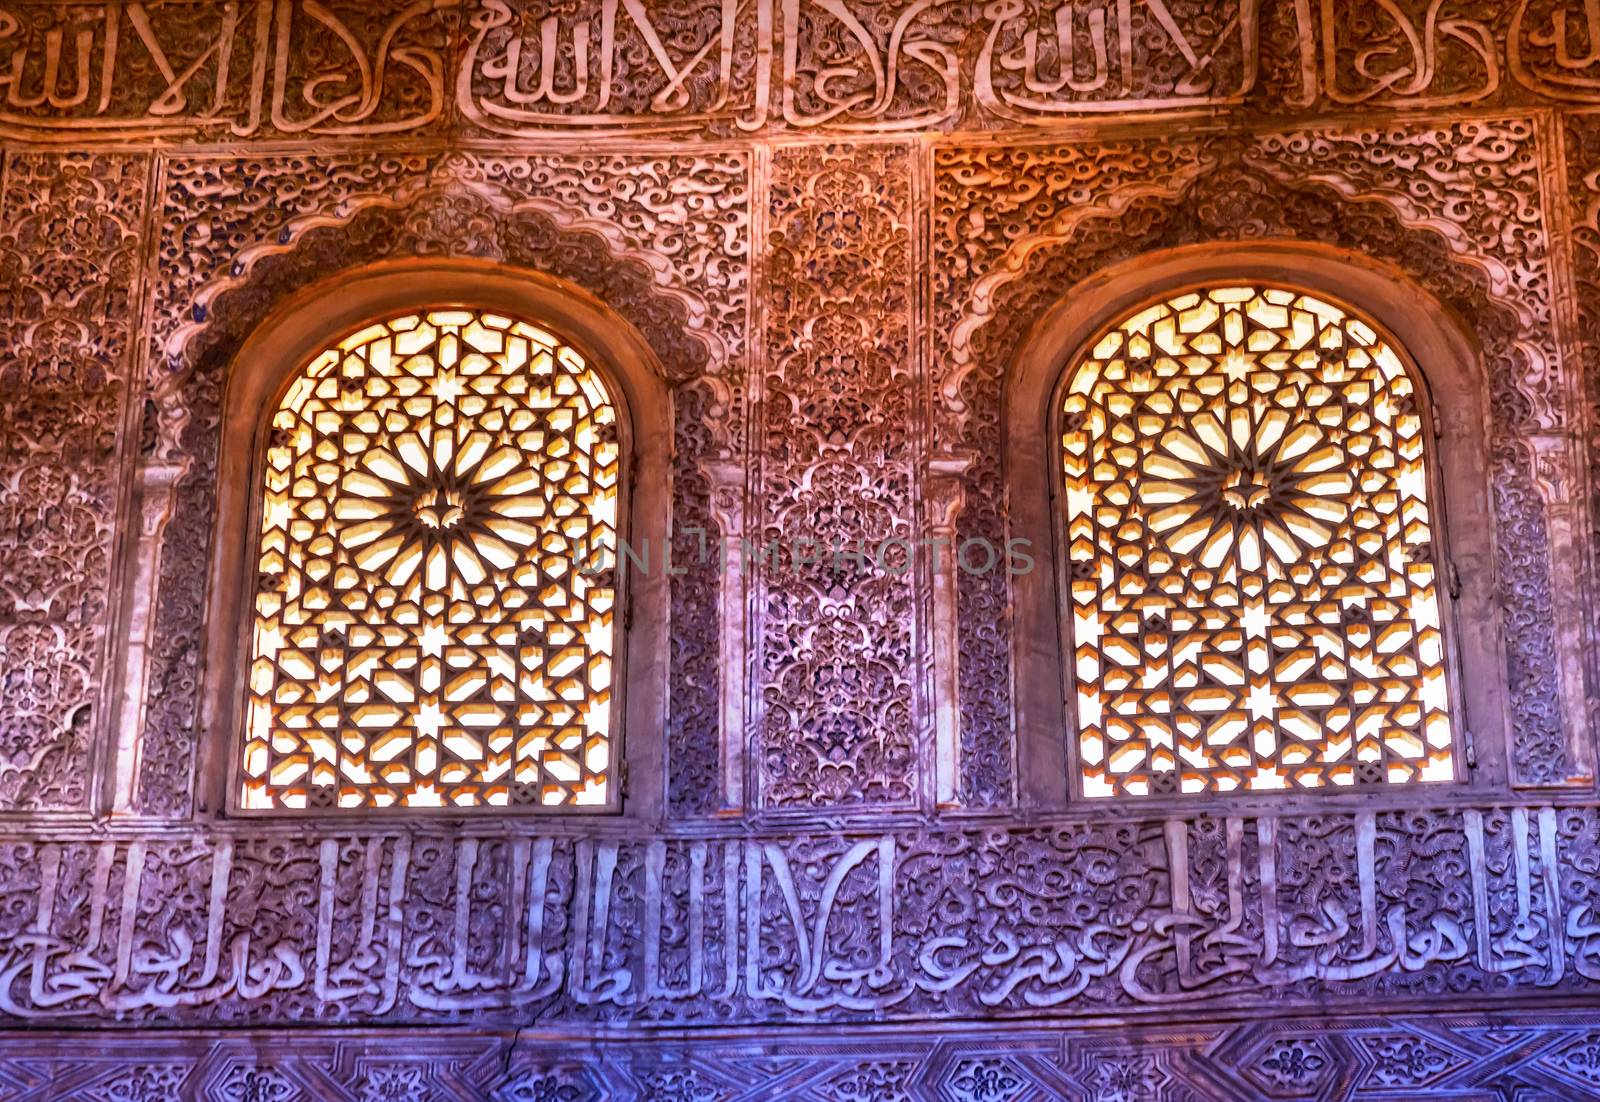 Windows Moorish Wall Designs Sala de Albencerrajes Alhambra Moorish Wall Patterns Designs Granada Andalusia Spain  